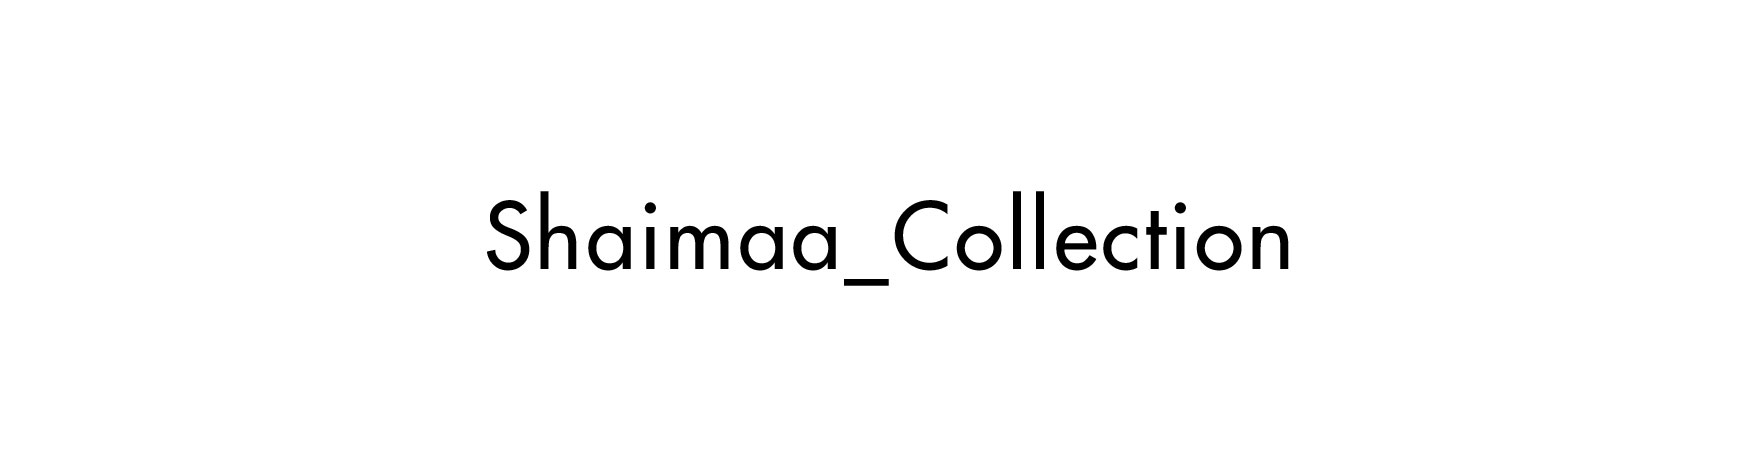 Shaimaa_Collection